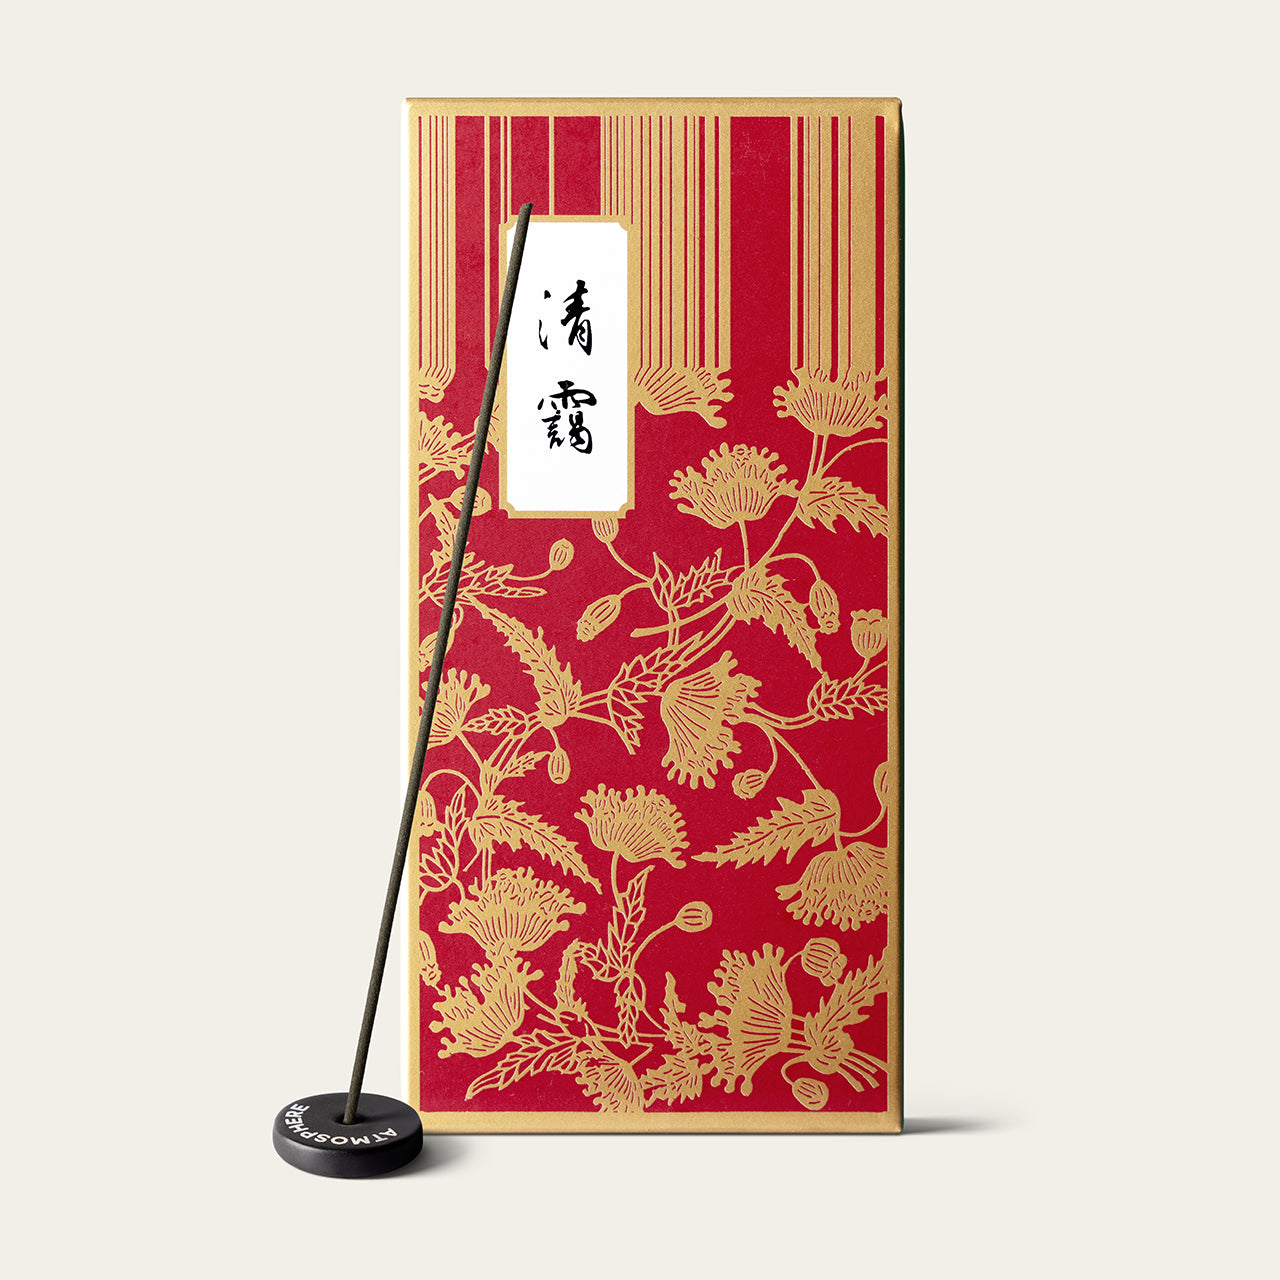 Kyukyodo Premium Clear Mist Seiai Japanese incense sticks (200 sticks) with Atmosphere ceramic incense holder